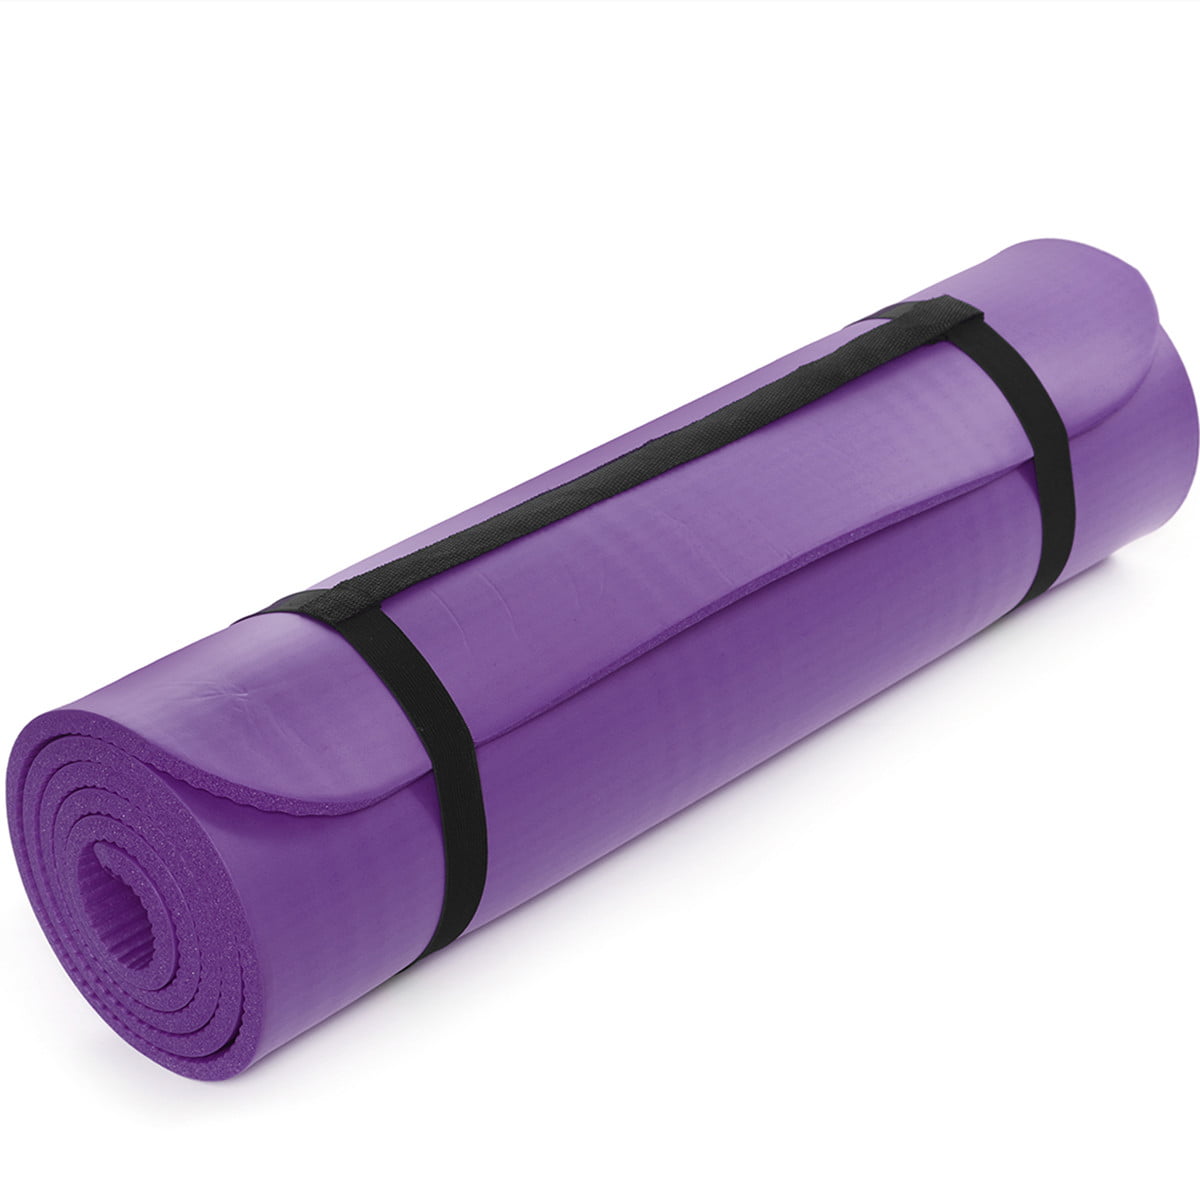 NBR Yoga Mat  yoga mat's Thick Exercise Fitness Physio Pilates Gym Mats Non Slip 